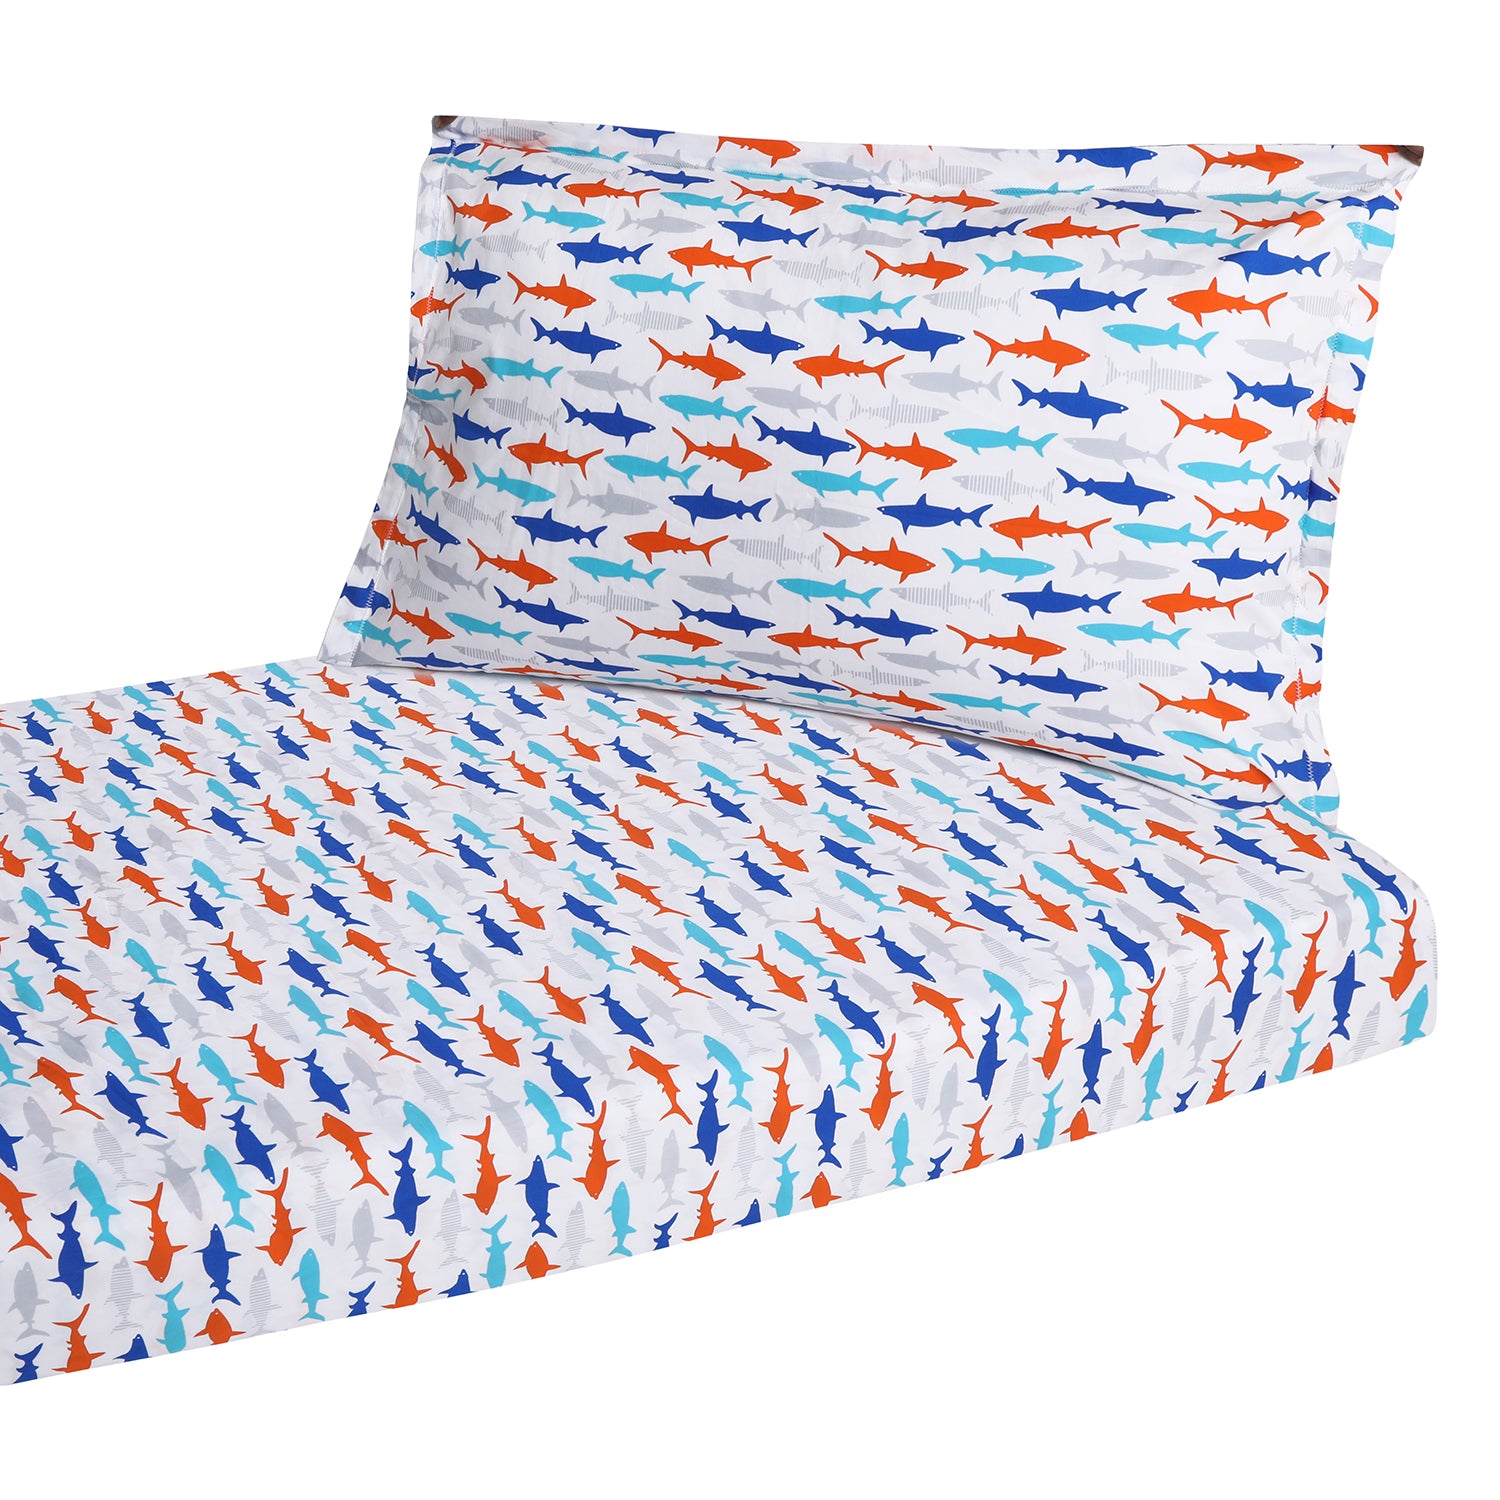 Bedsheet Set - Shark Bedsheet, Single/Double Bed Sizes Available